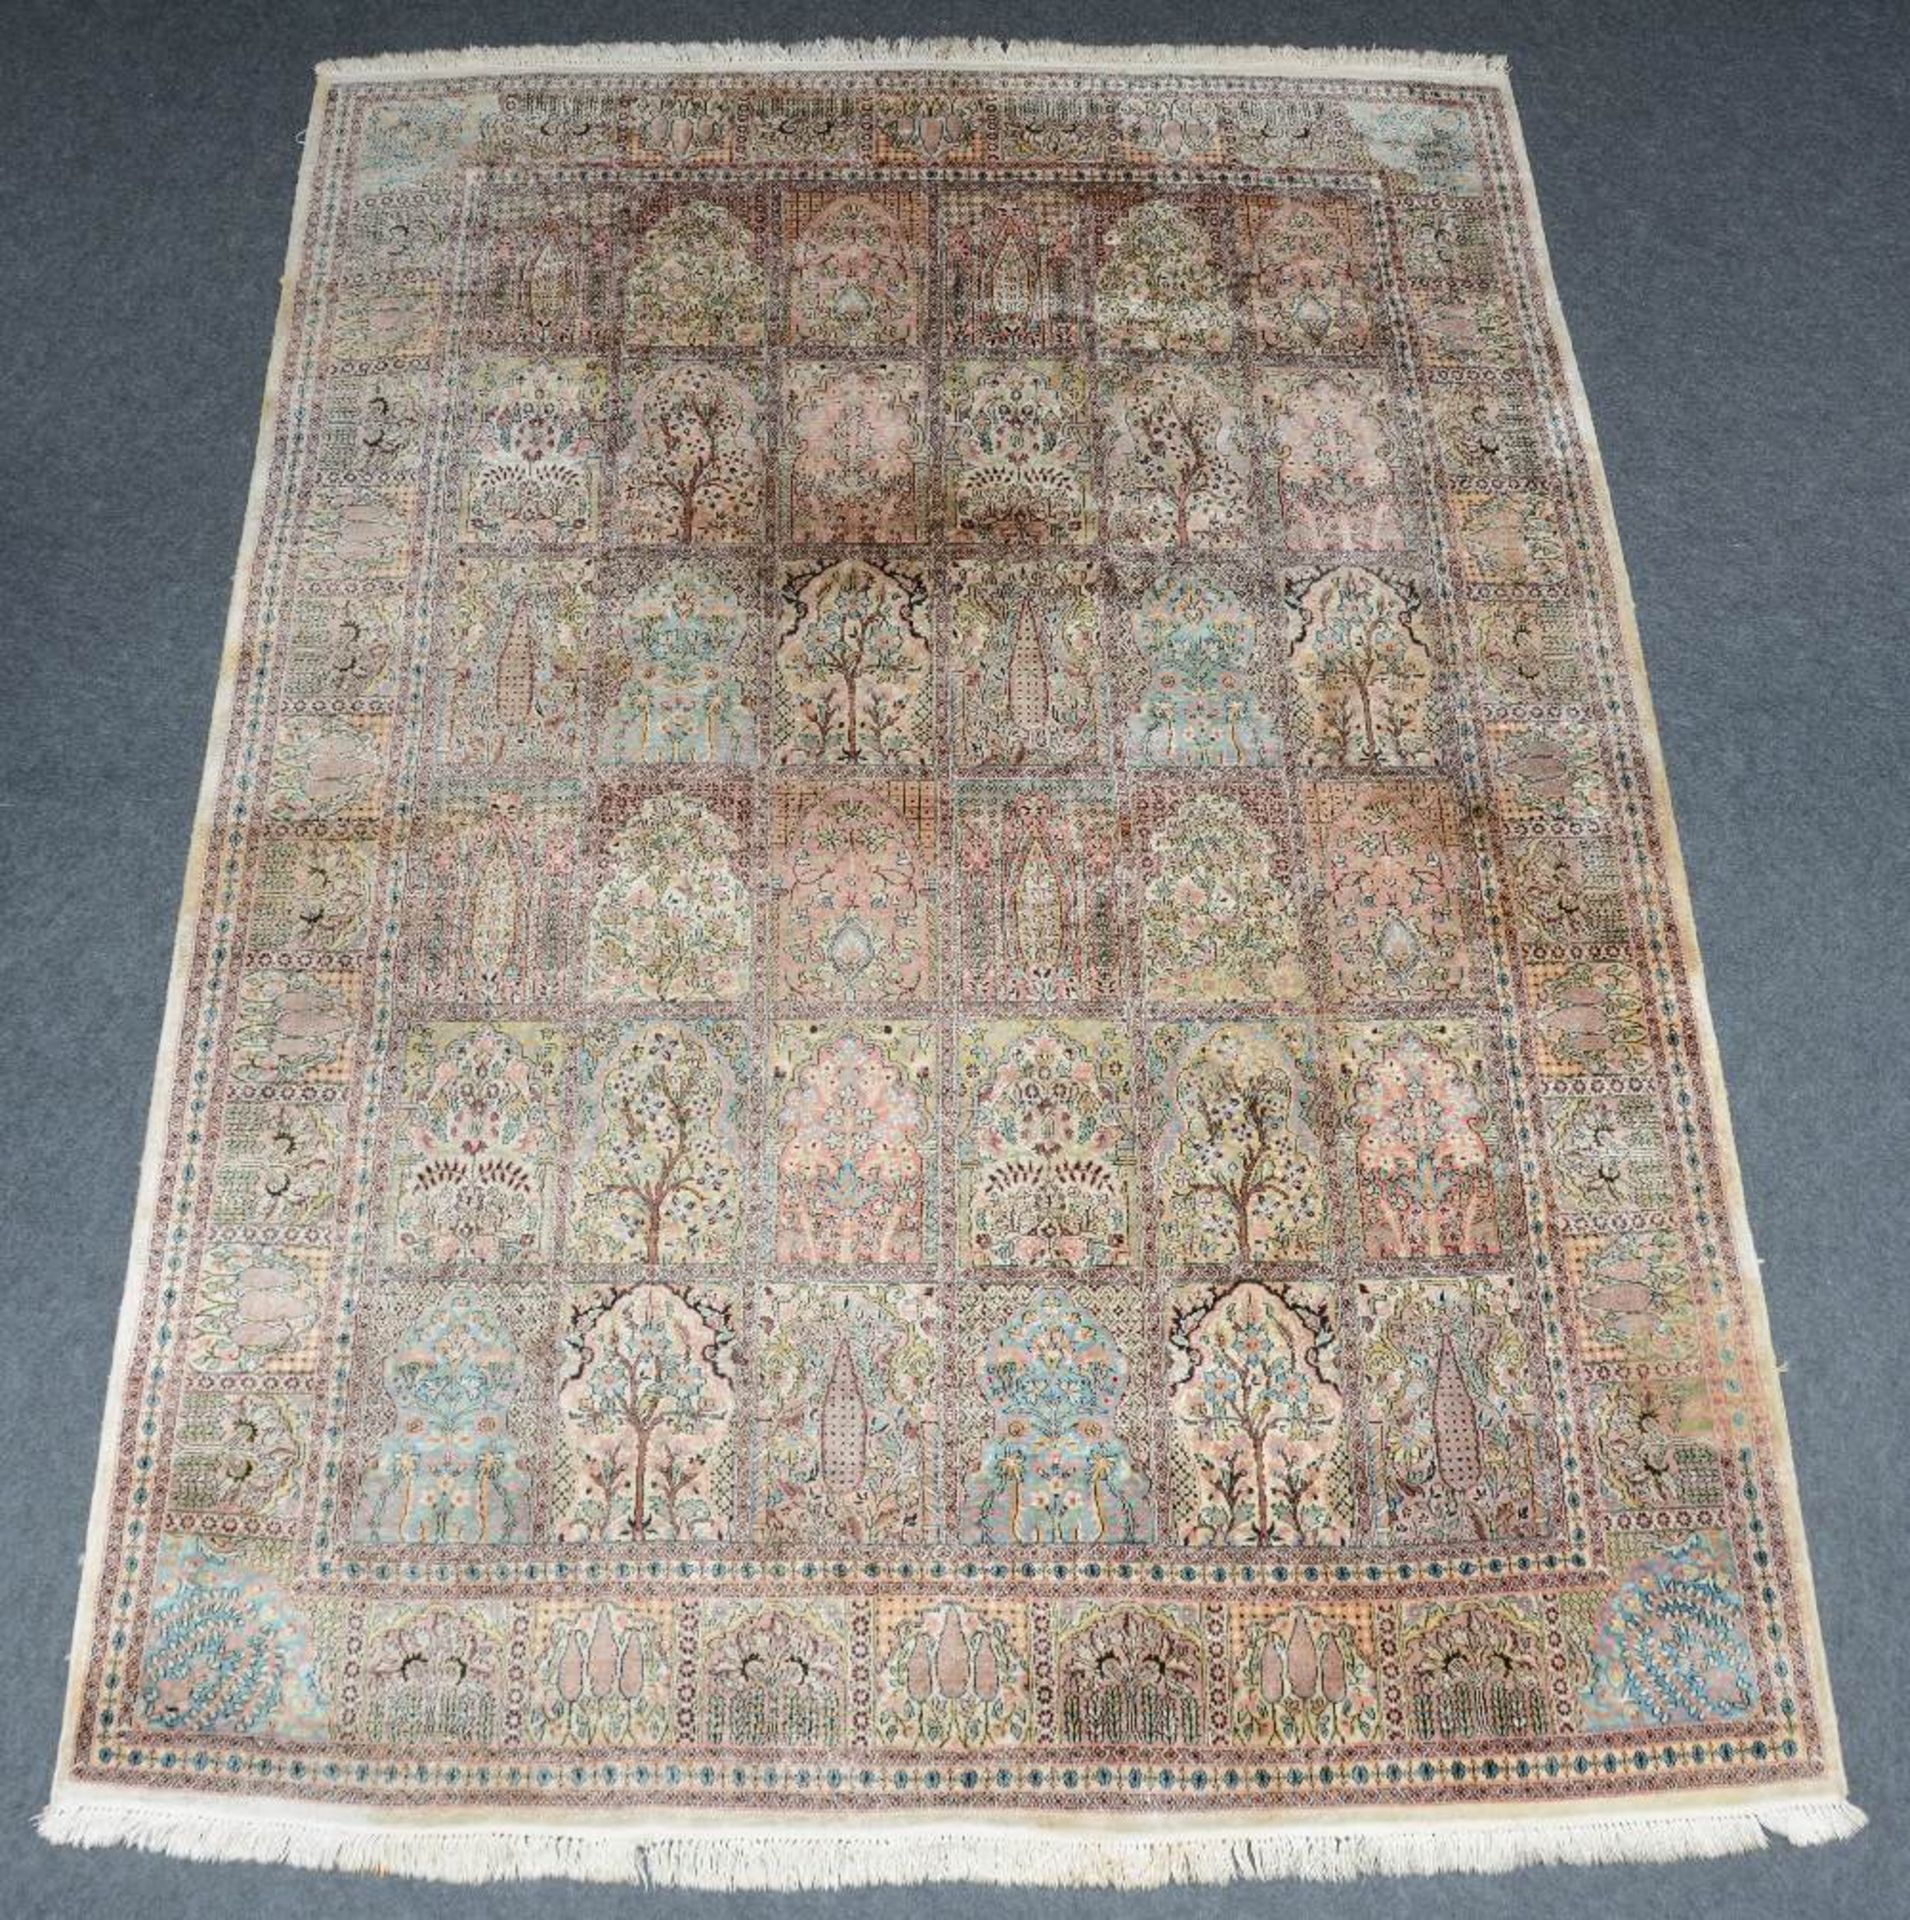 An Oriental rug, silk on cotton, 246 x 333